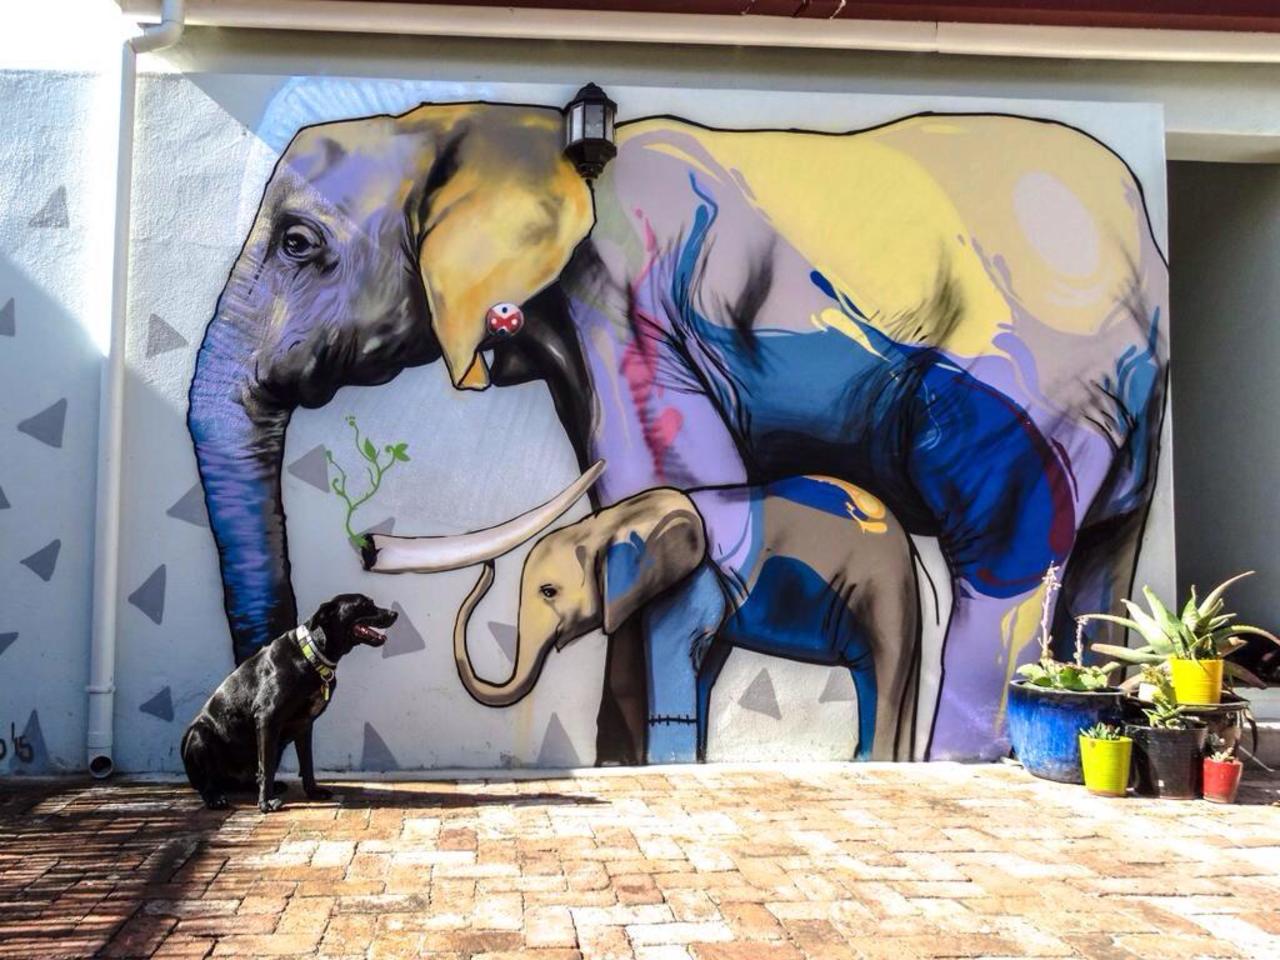 Latest nature in Street Art piece by Falko Paints In Cape Town

#art #mural #graffiti #streetart http://t.co/lw3sriluDU